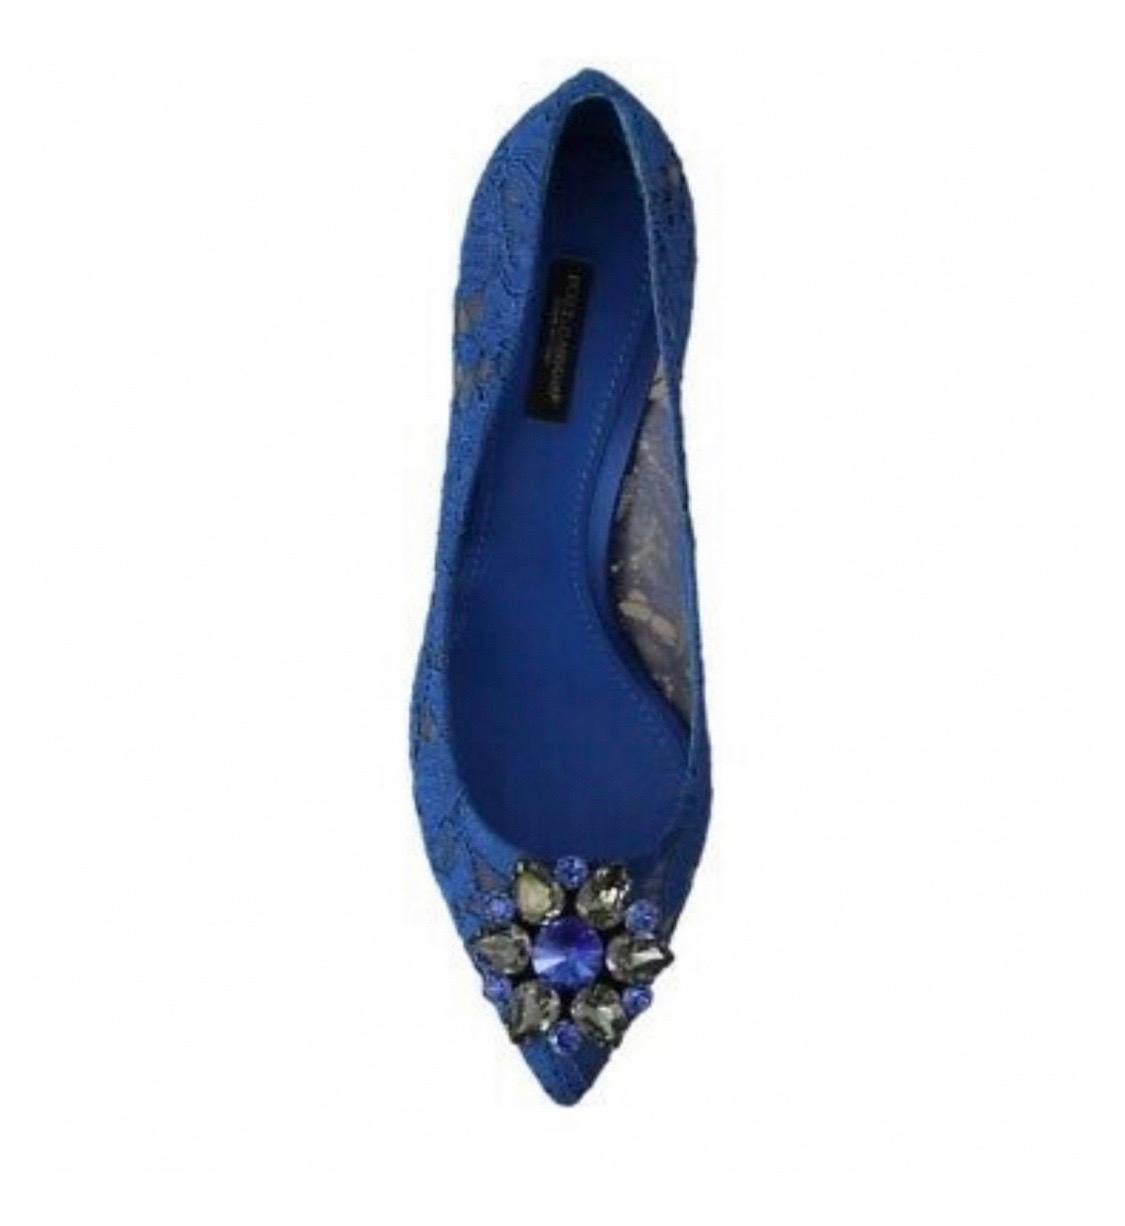 dolce and gabbana blue heels